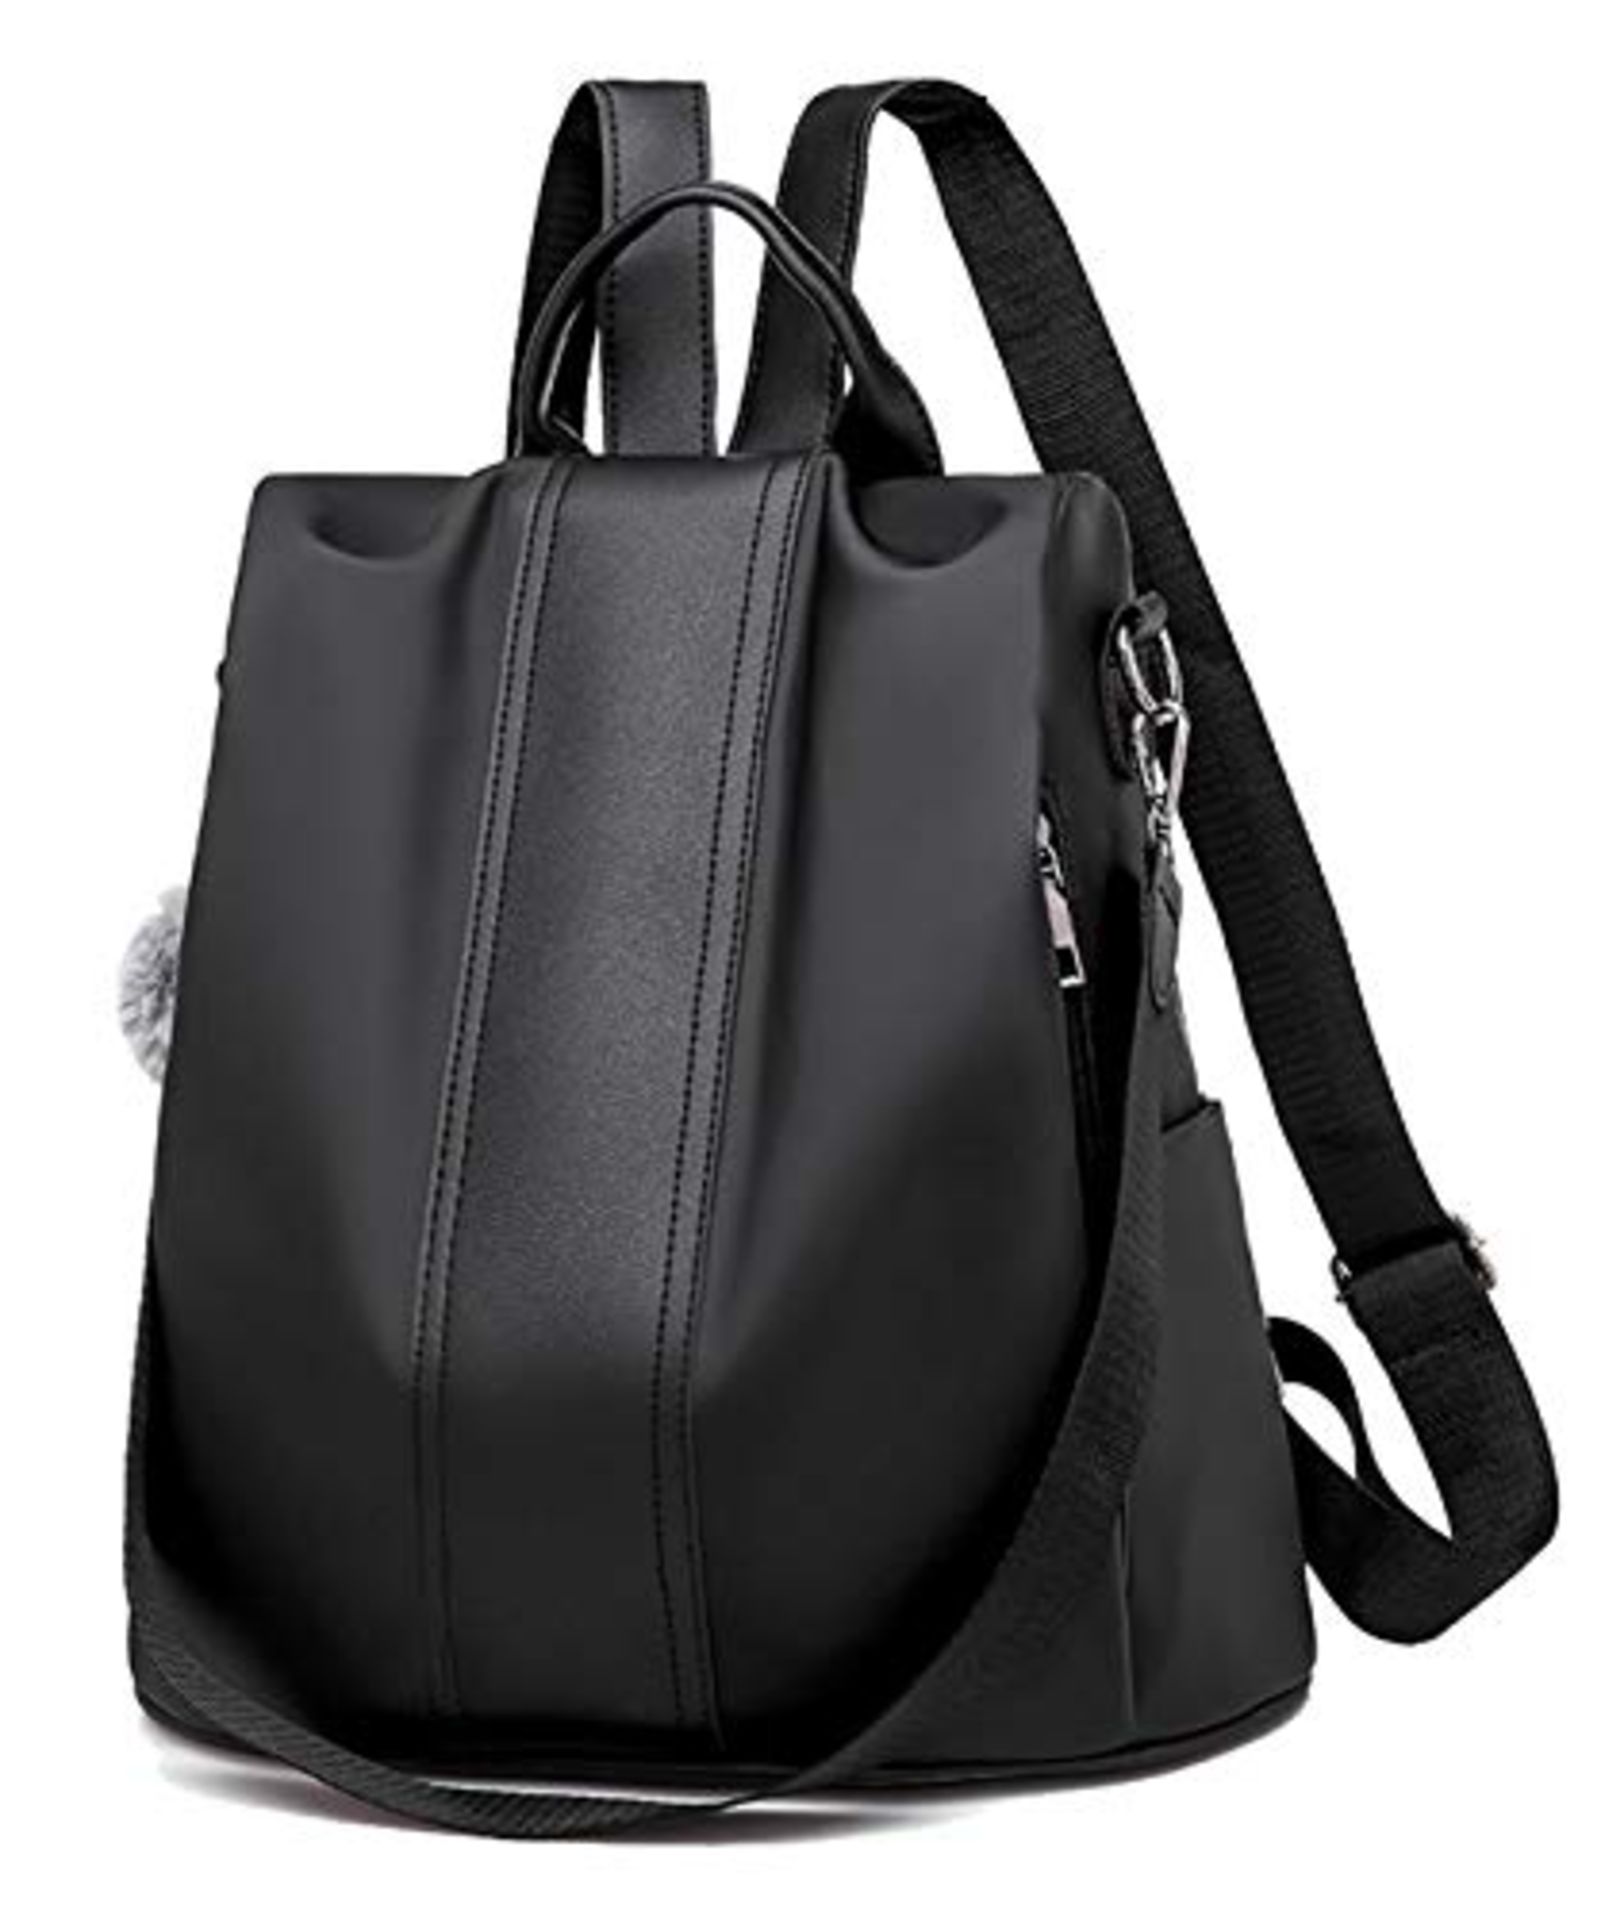 RRP £24.62 shepretty Backpacks Anti Theft Women Travel Rucksack Shoulder Bag,B648,8888-k.